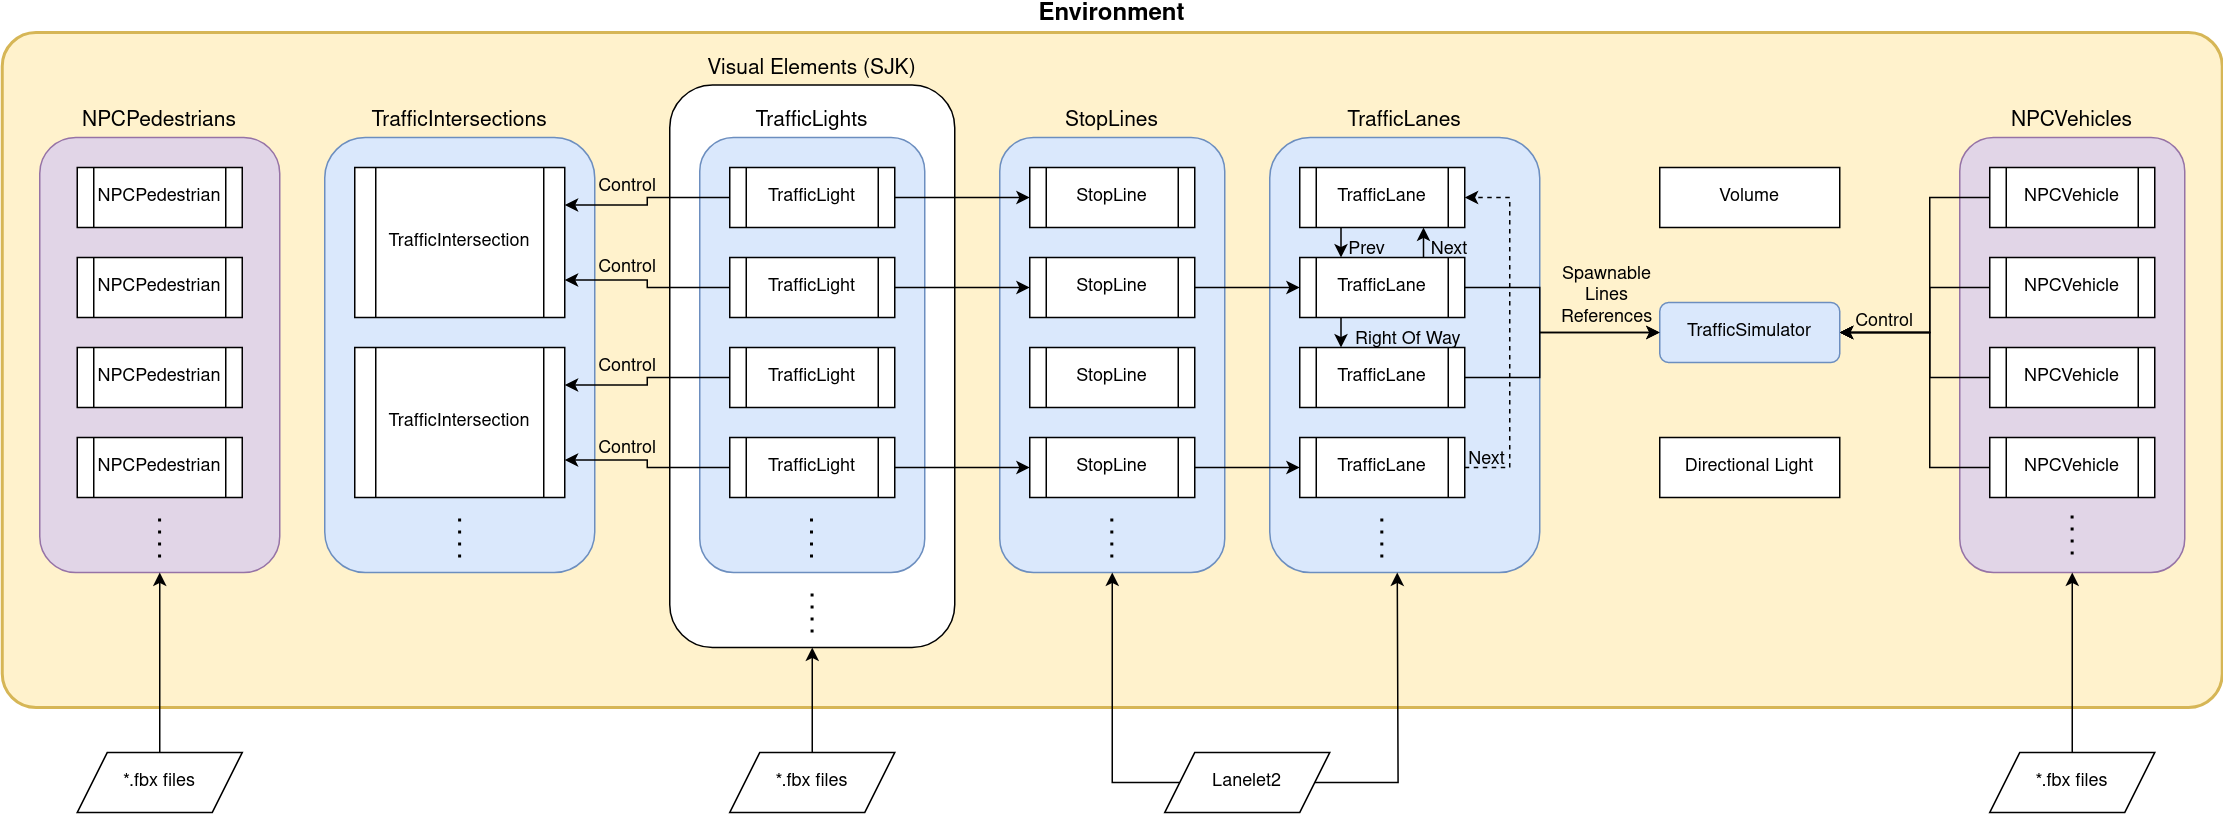 environment diagram